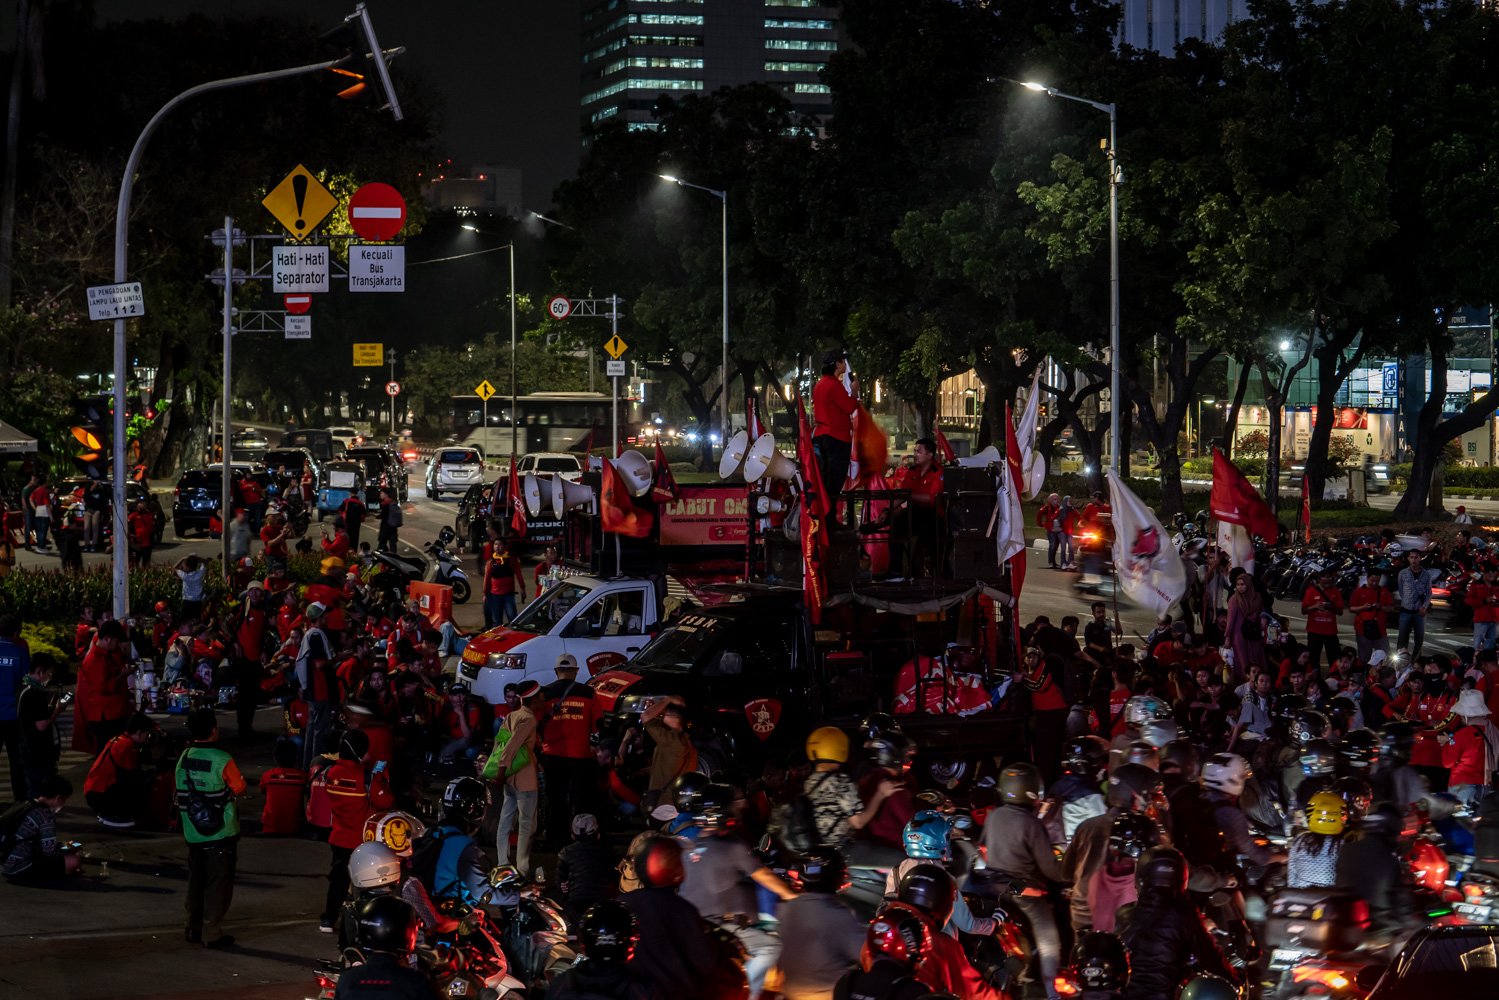 Sejumlah massa yang tergabung dari berbagai serikat buruh memblokade jalan saat unjuk rasa di kawasan Patung Kuda Arjuna Wiwaha, Jakarta, Senin (2/10). Peserta aksi yang terdiri dari sejumlah organisasi buruh melakukan aksi dari Jalan MH Thamrin hingga kawasan Patung Kuda Arjuna Wiwaha. Aksi mereka kali ini bertepatan dengan pembacaan uji formil mengenai Undang-Undang (UU) Cipta Kerja oleh Mahkamah Konstitusi (MK). Dalam putusannya MK menolak gugatan uji formil UU Cipta Kerja yang dilayangkan sejumlah buruh